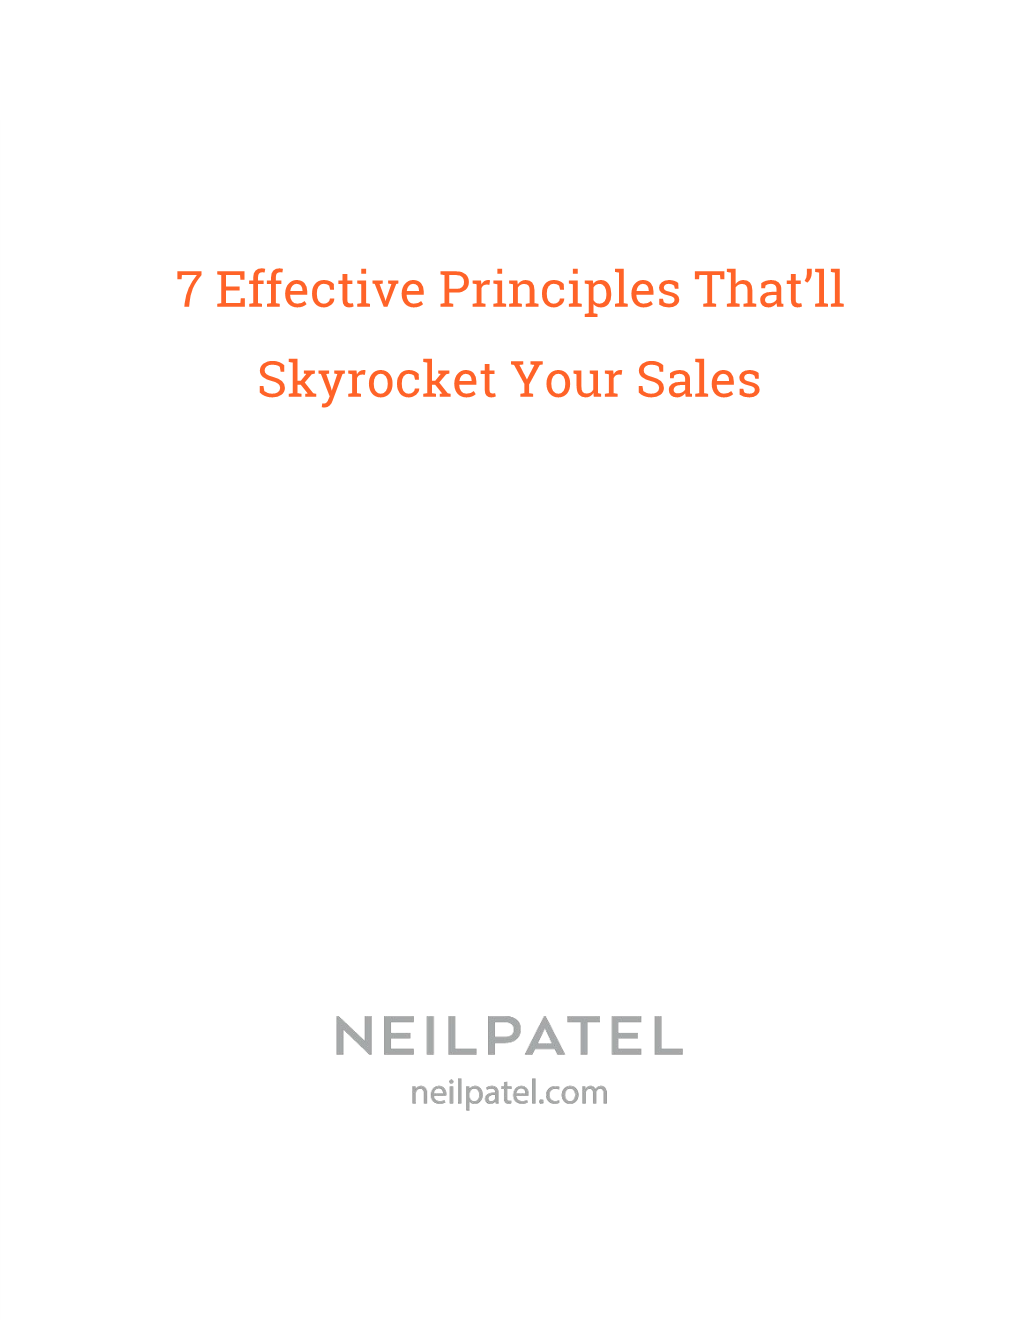 7 Effective Principles That'll Skyrocket Your Sales